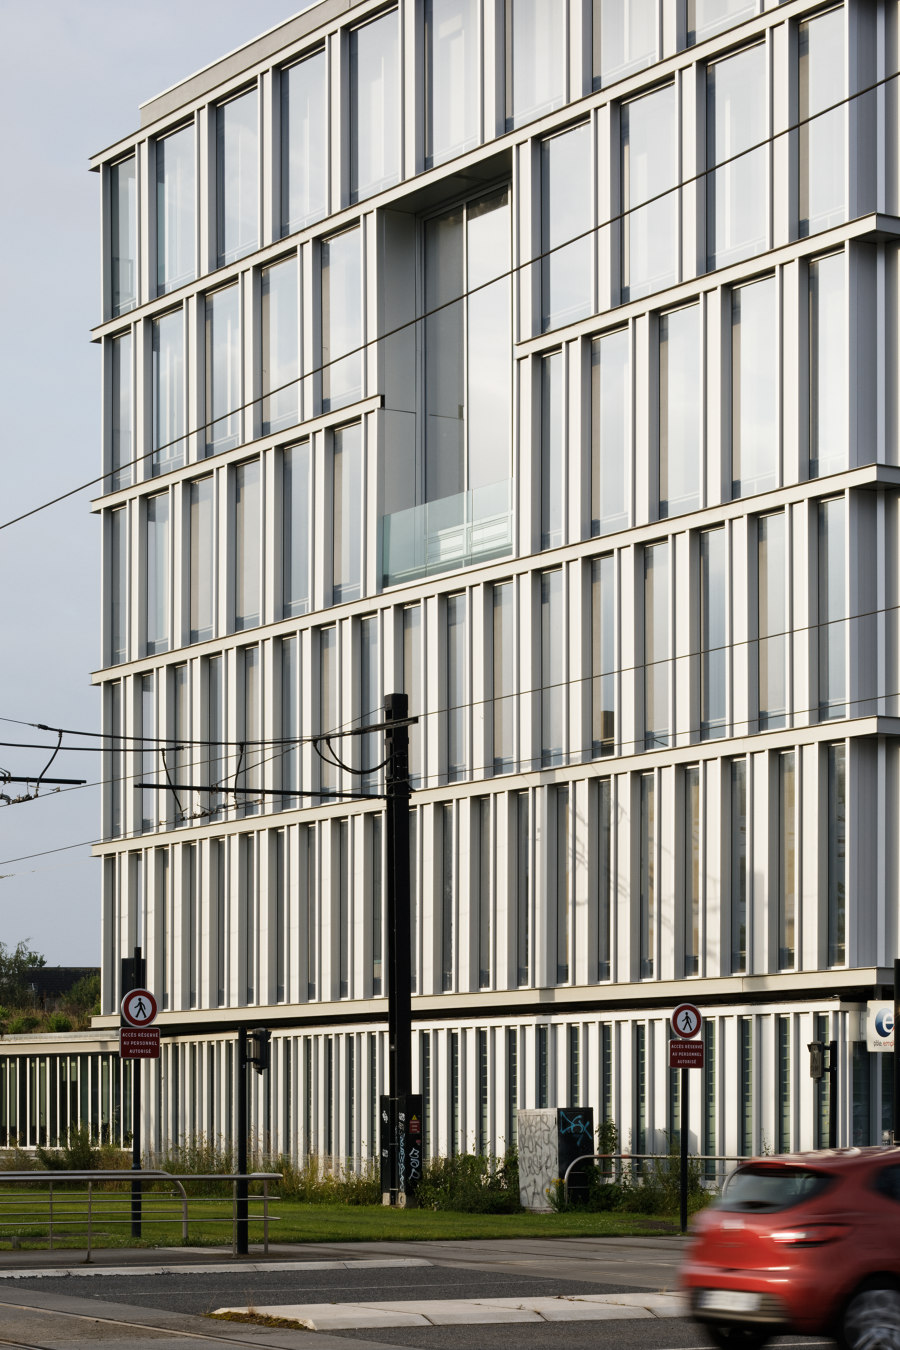 Nantes Haluchère by Thibaud Babled Architectes Urbanistes | Office buildings